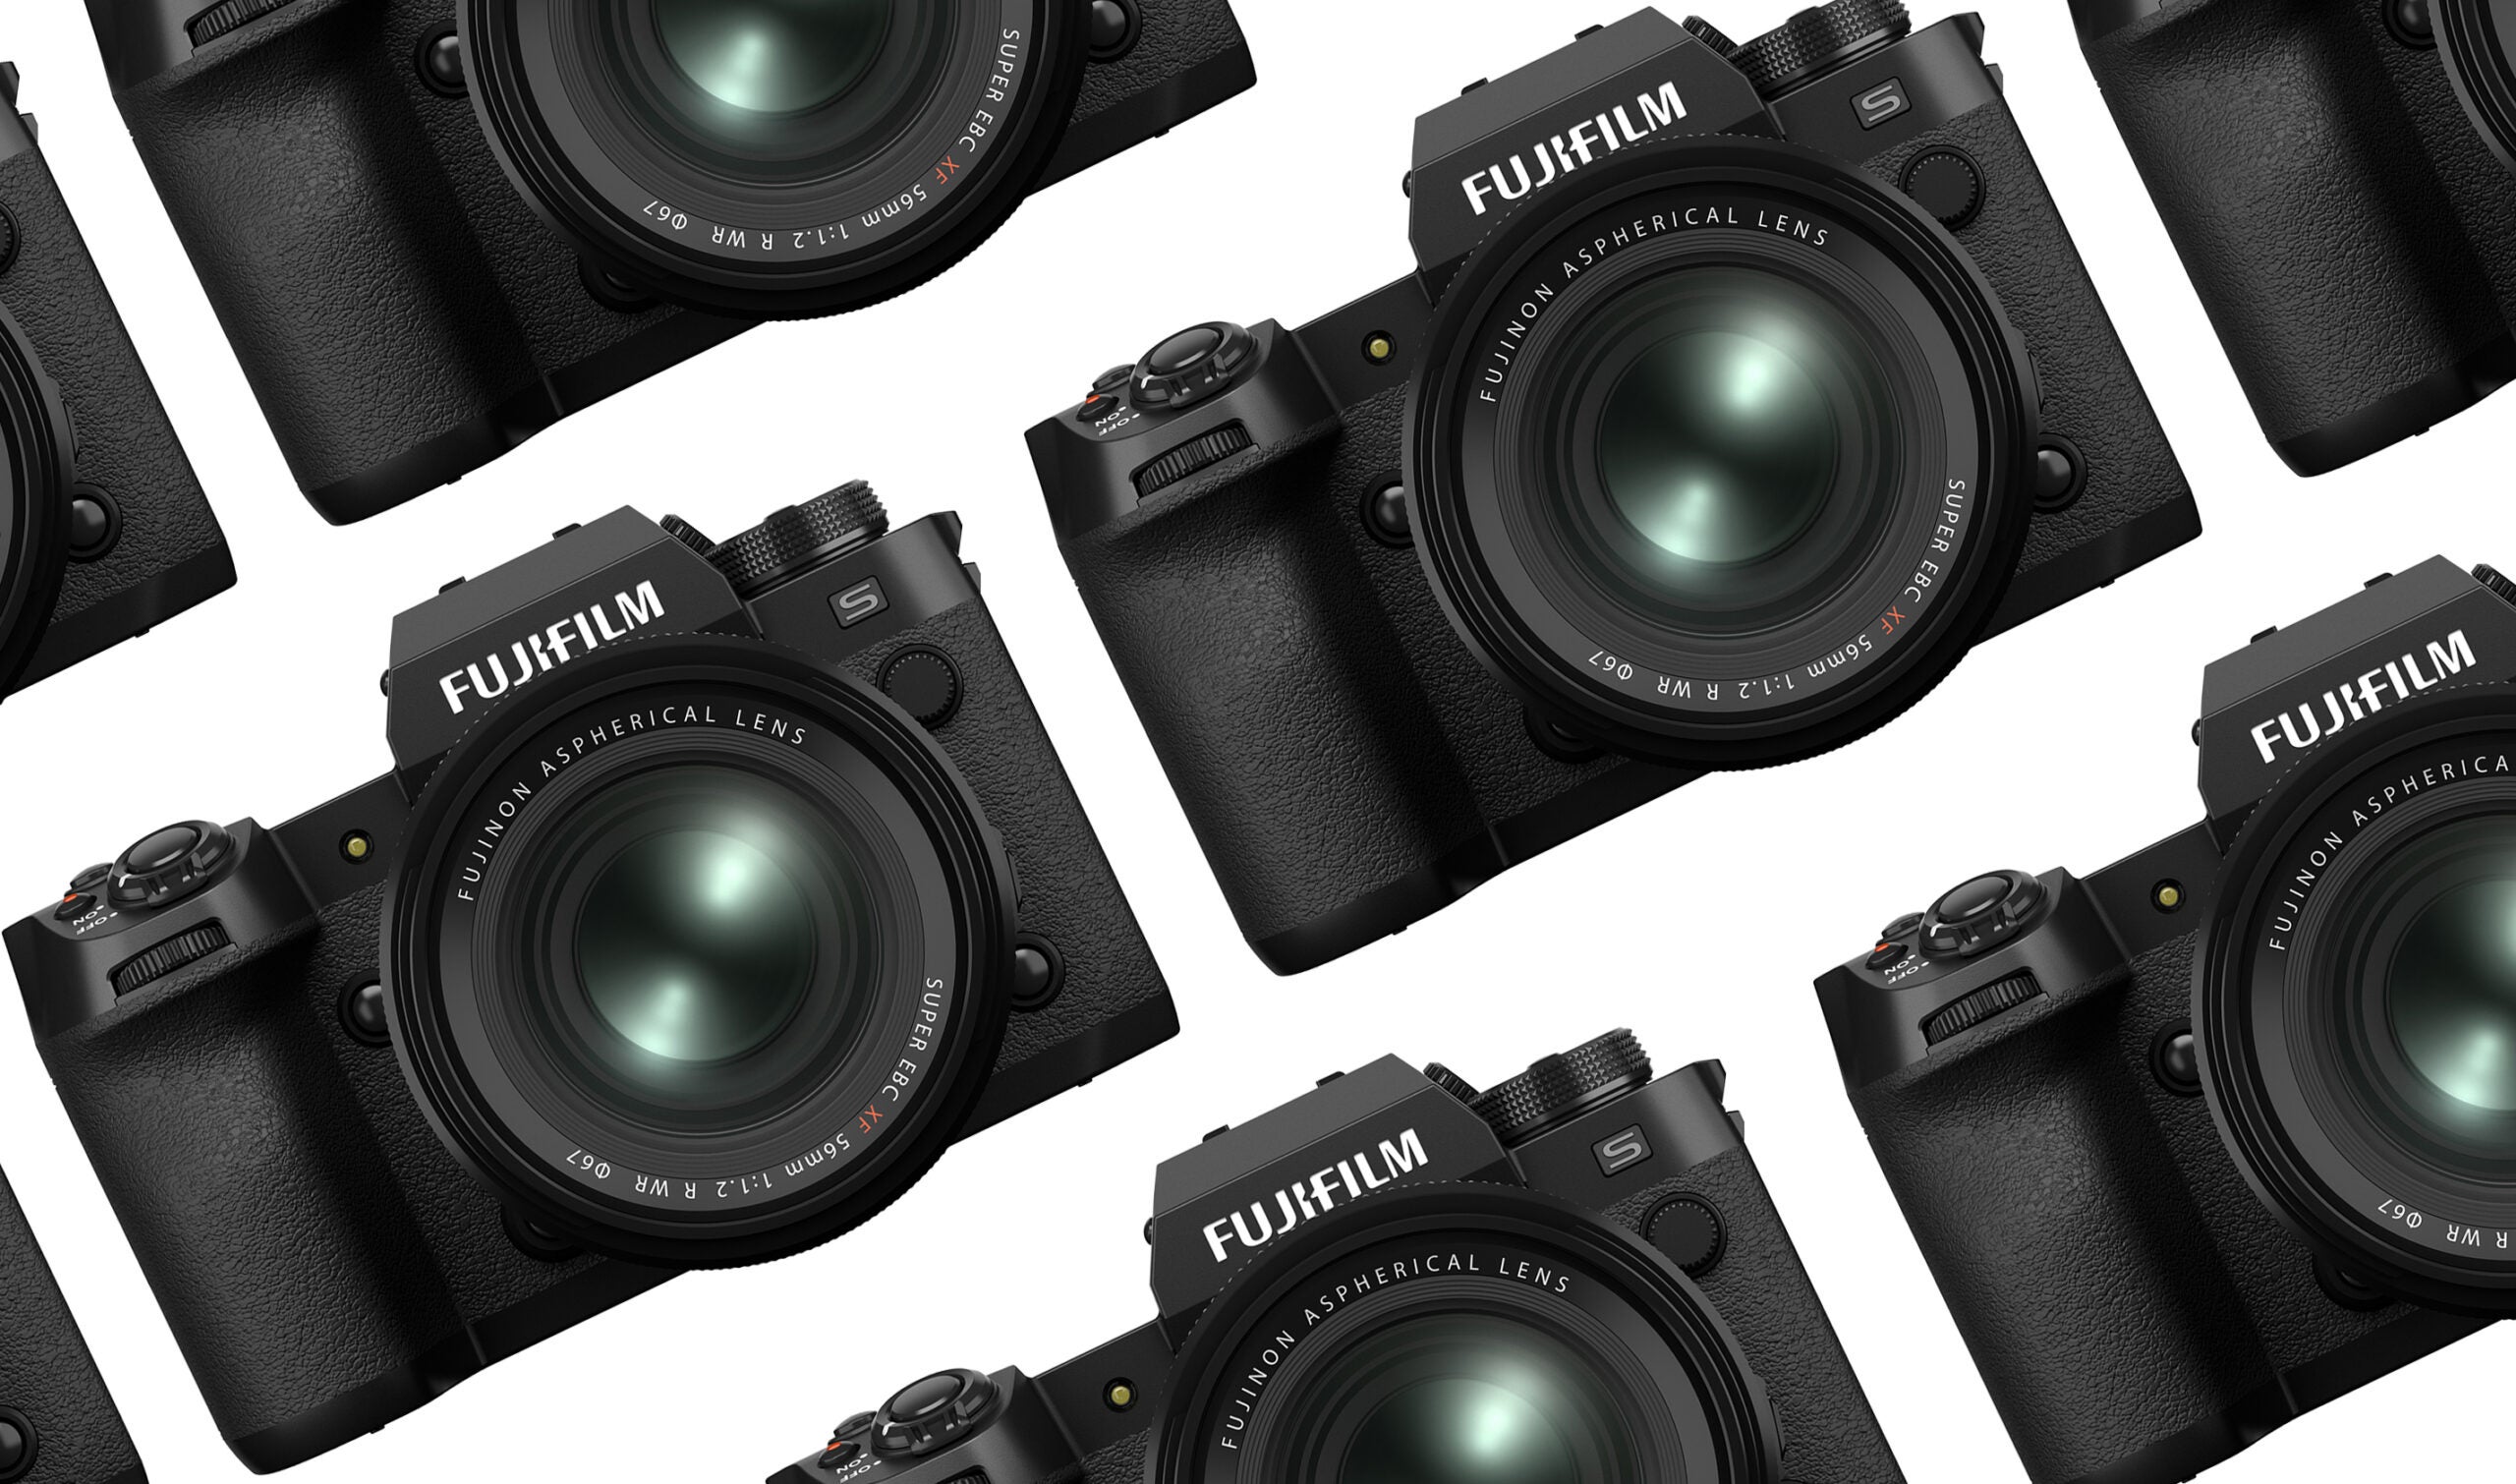 The new Fujifilm 56mm f/1.2 R WR lens